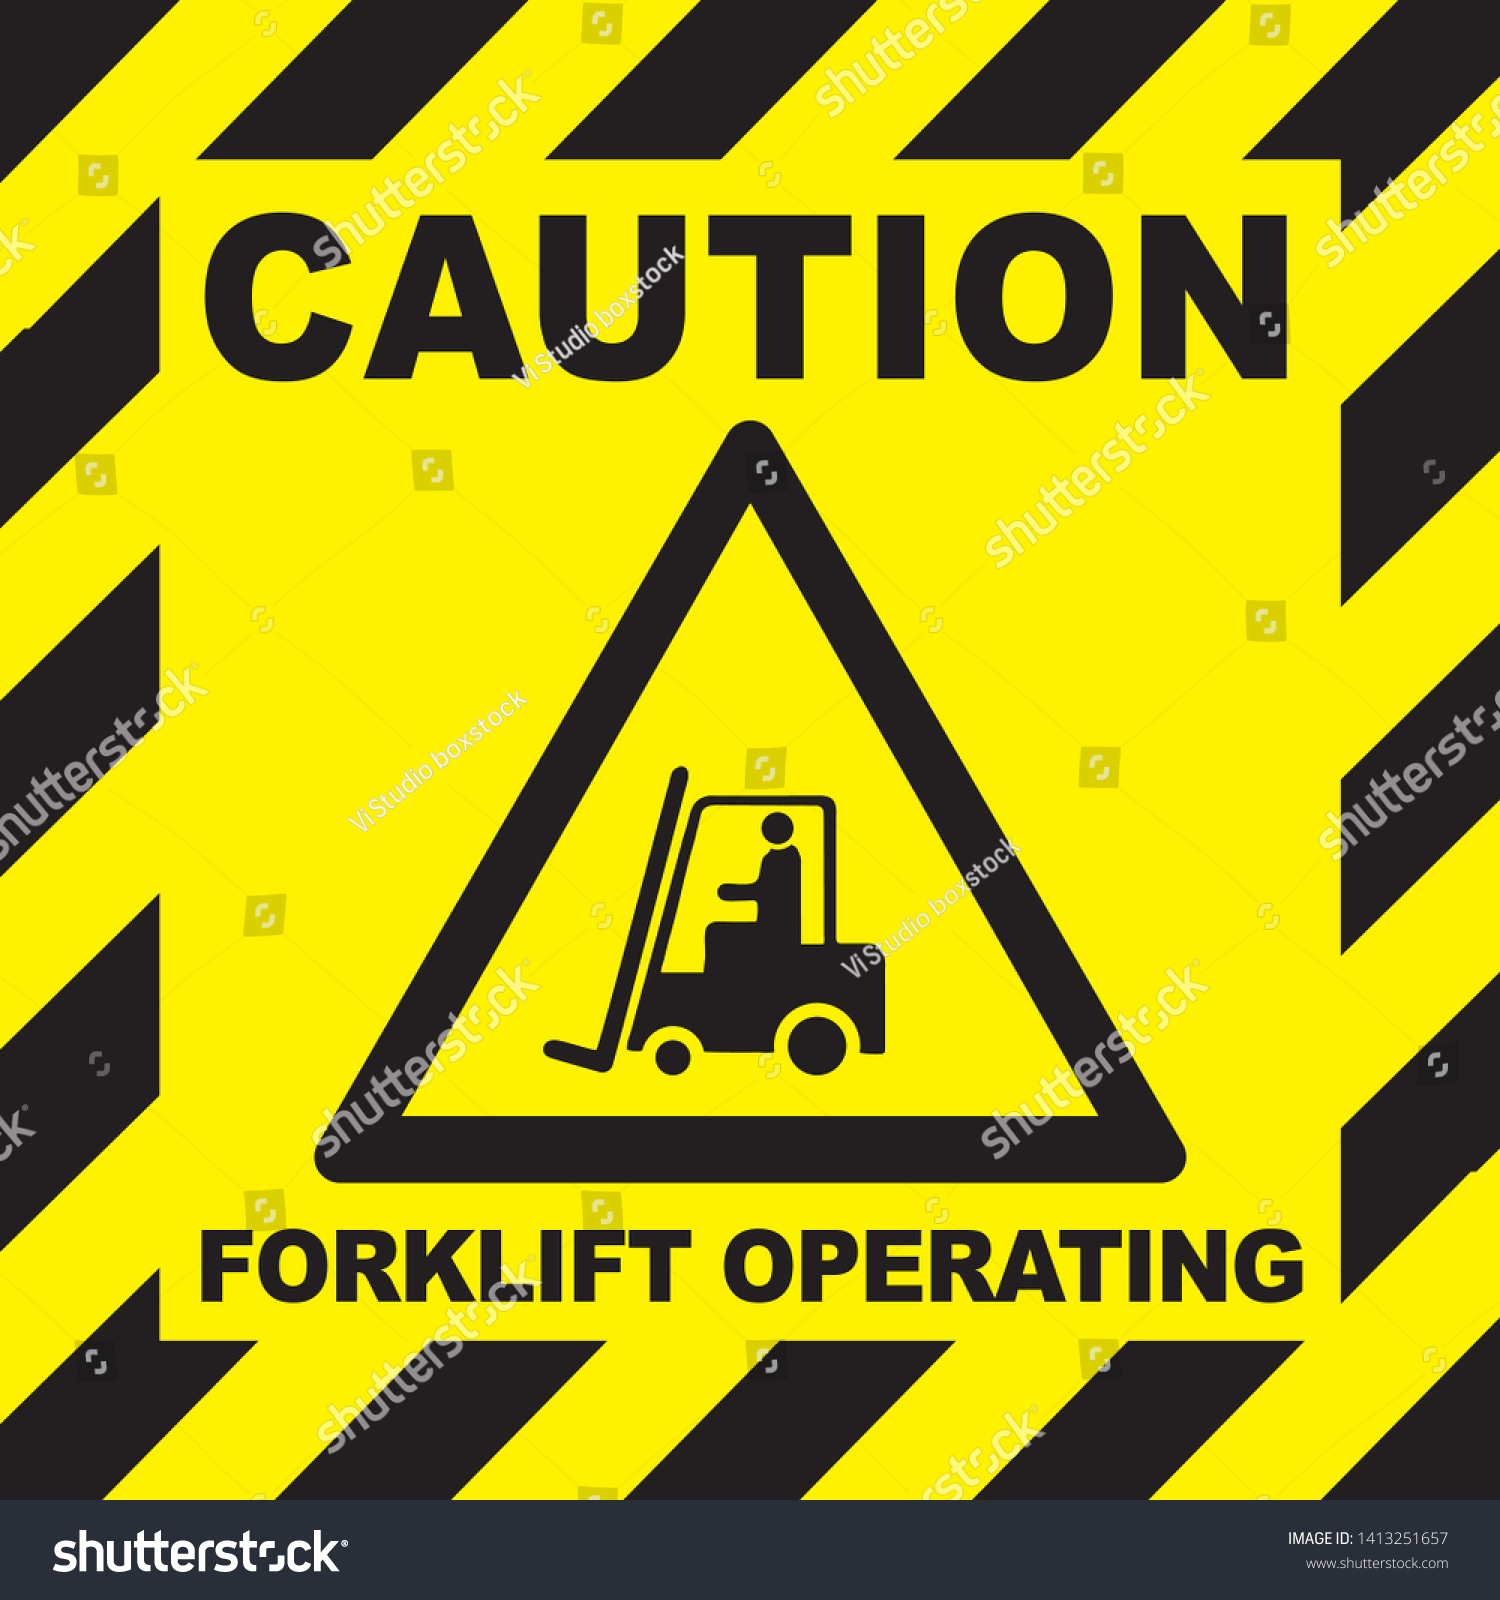 Caution Forklift Trucks Operating Sign Triangle เวกเตอร์สต็อก ปลอดค่าลิขสิทธิ์ 1413251657